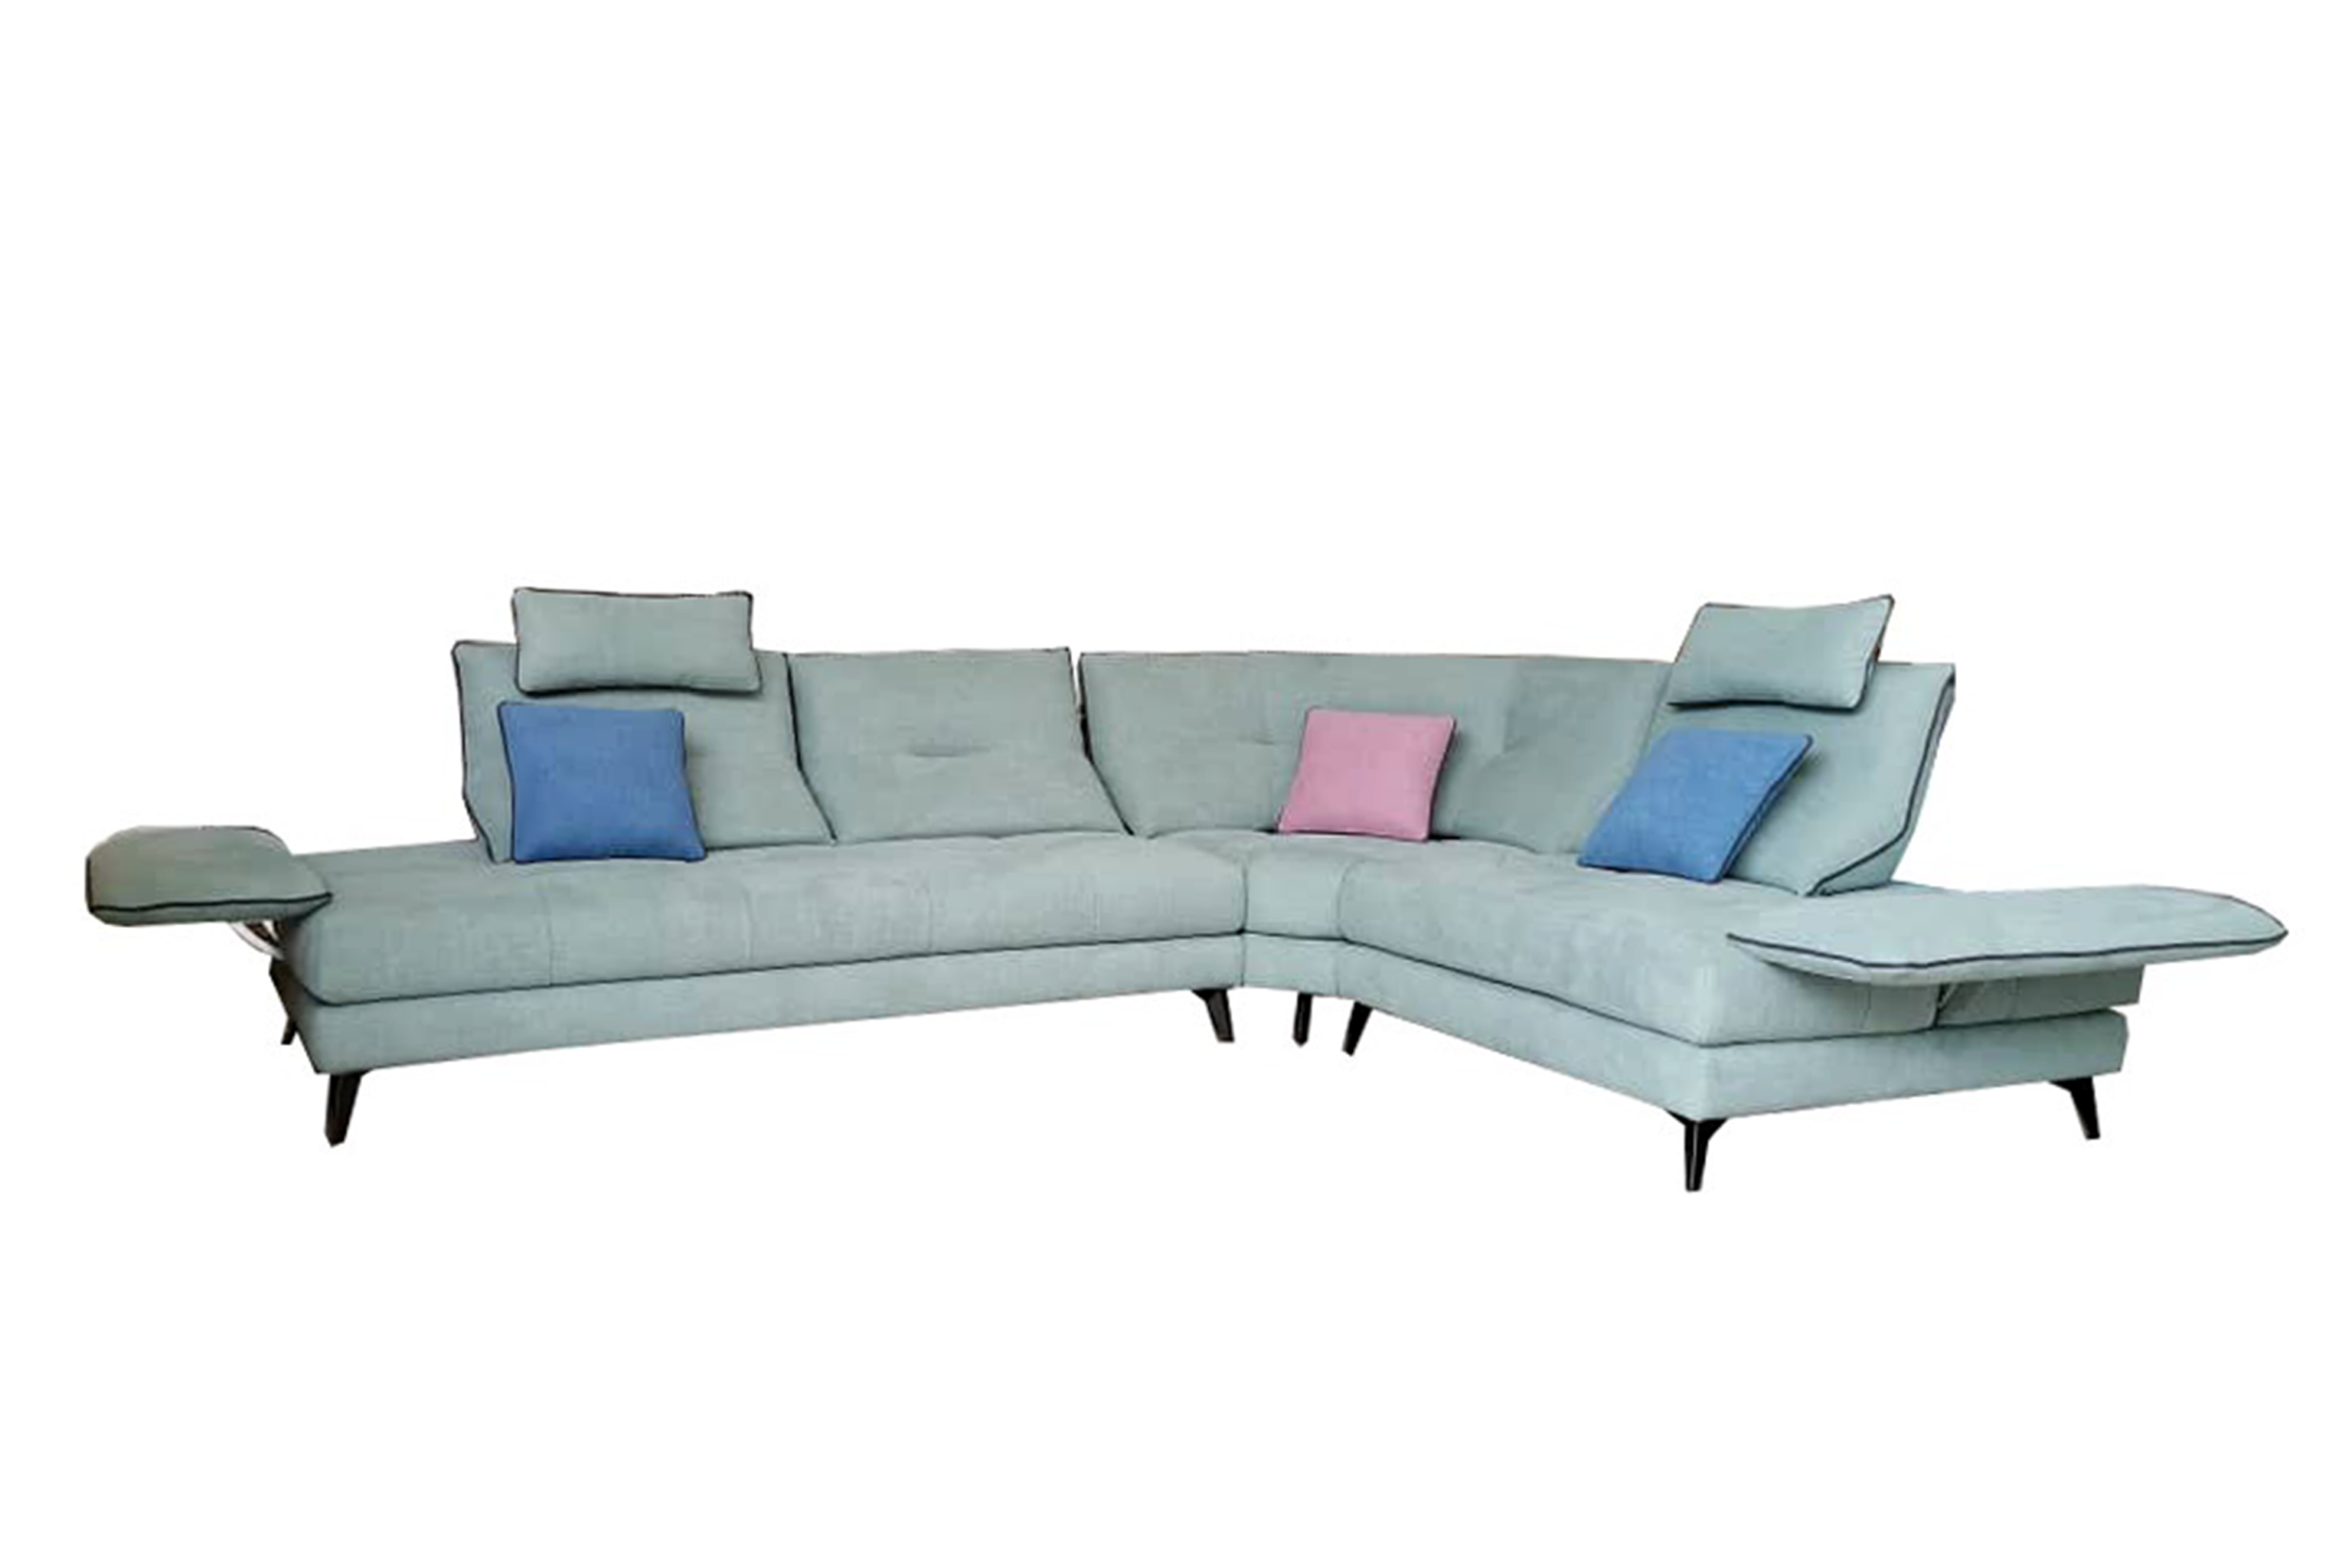 KOZAR Sectional Sofa in Fabric by Castilla